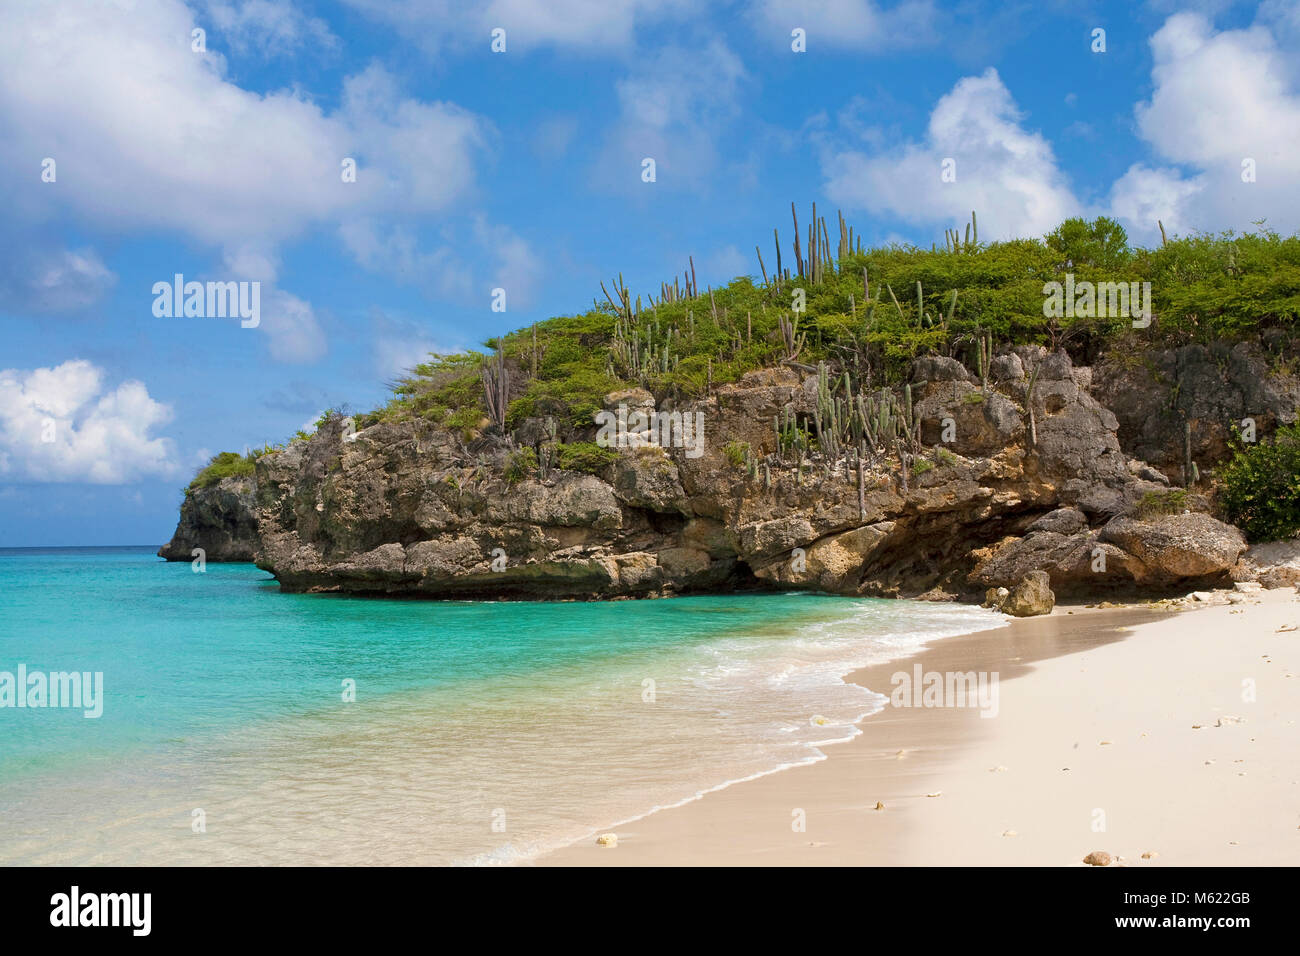 Popolare spiaggia 'Grote Knip', Curacao, Antille olandesi, Caraibi, Mar dei Caraibi Foto Stock